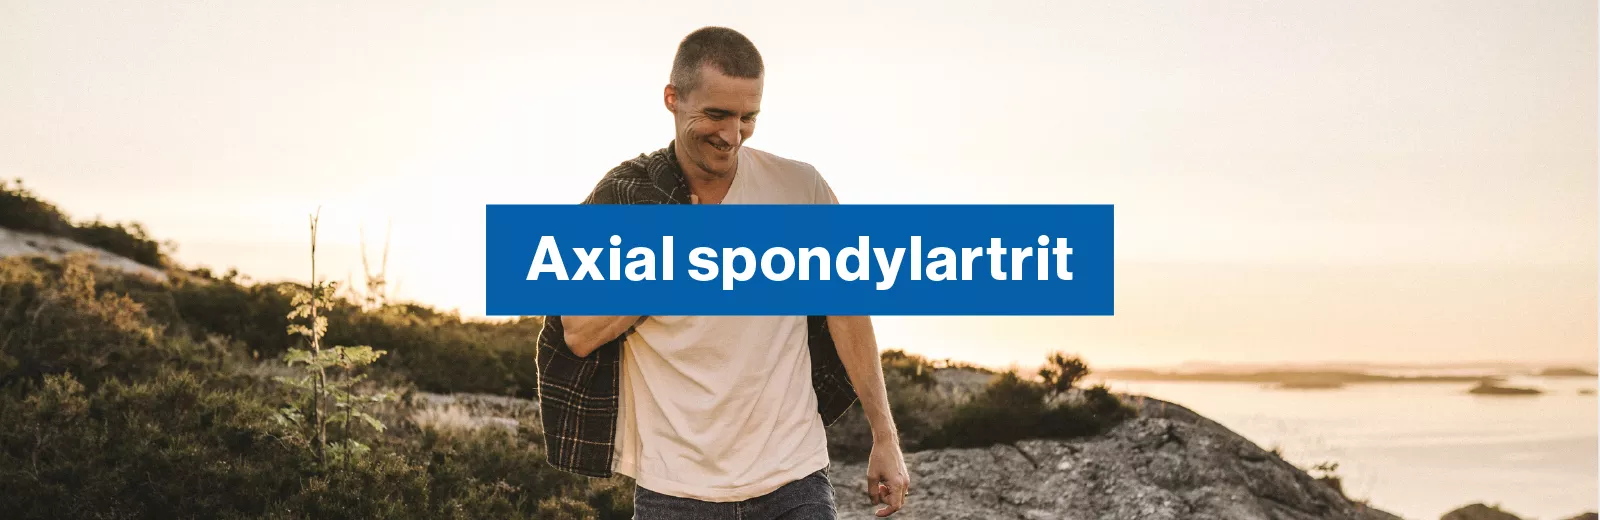 Axial spondylartrit, inflammatorisk ryggsmärta